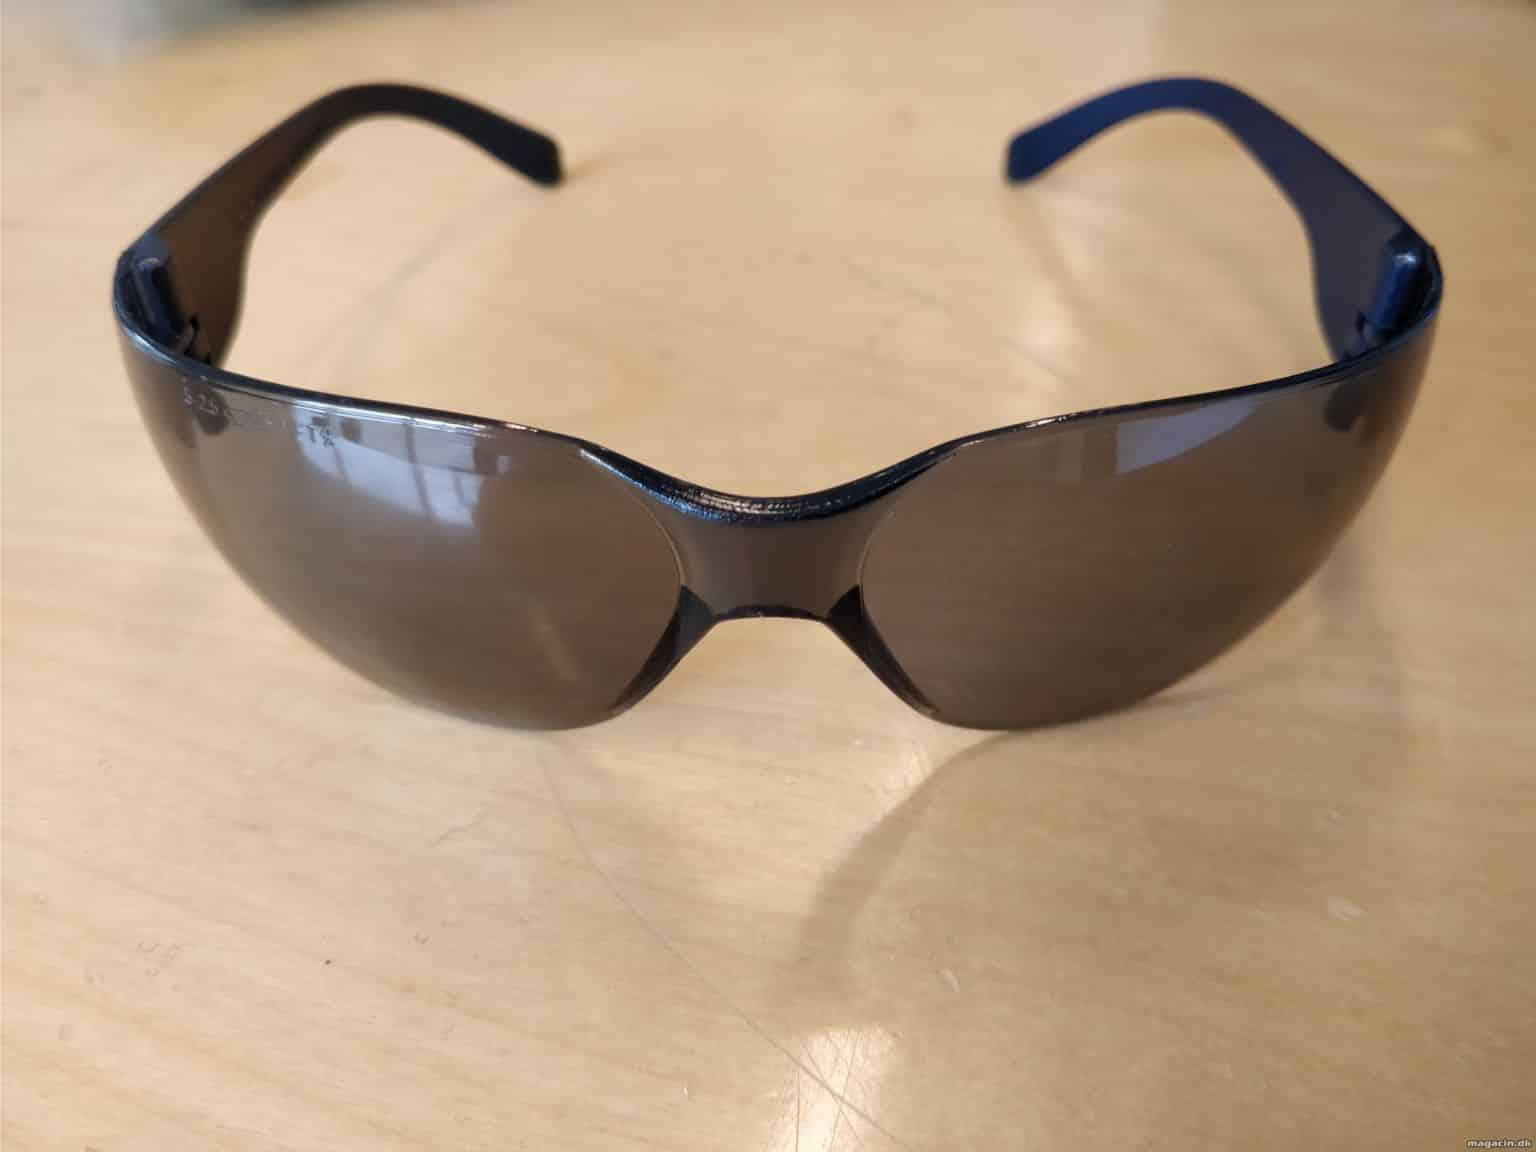 Test: Swiss solbriller - MC briller